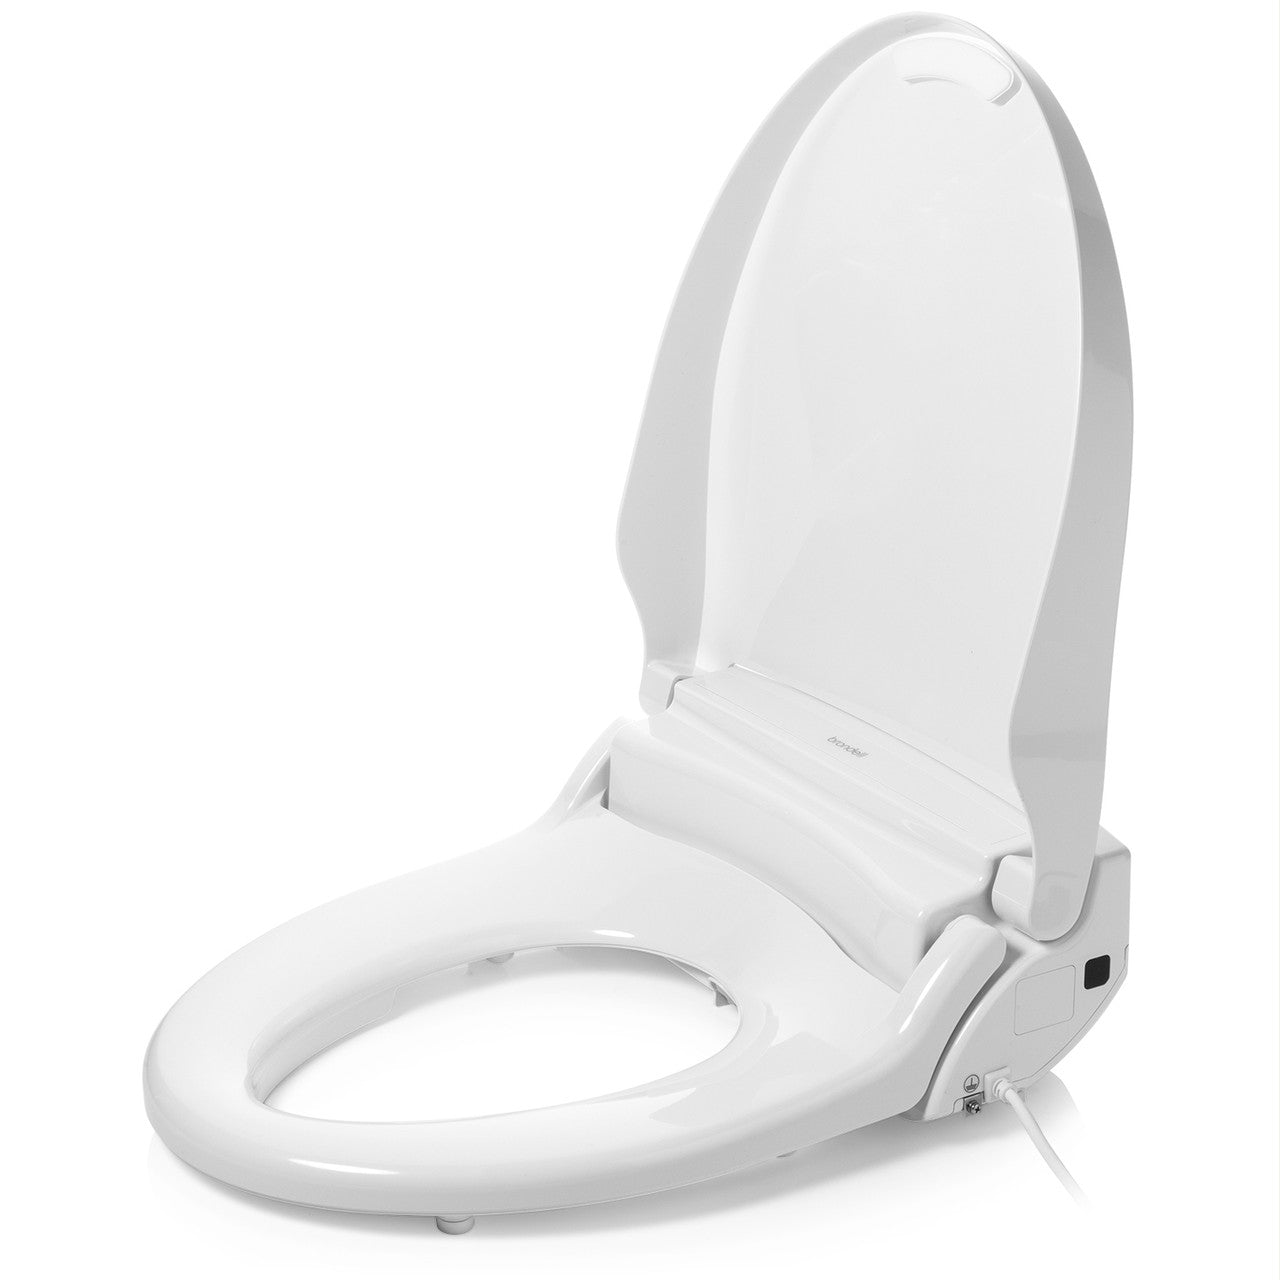 Swash Select BL97 Remote Controlled Bidet Seat, Round White